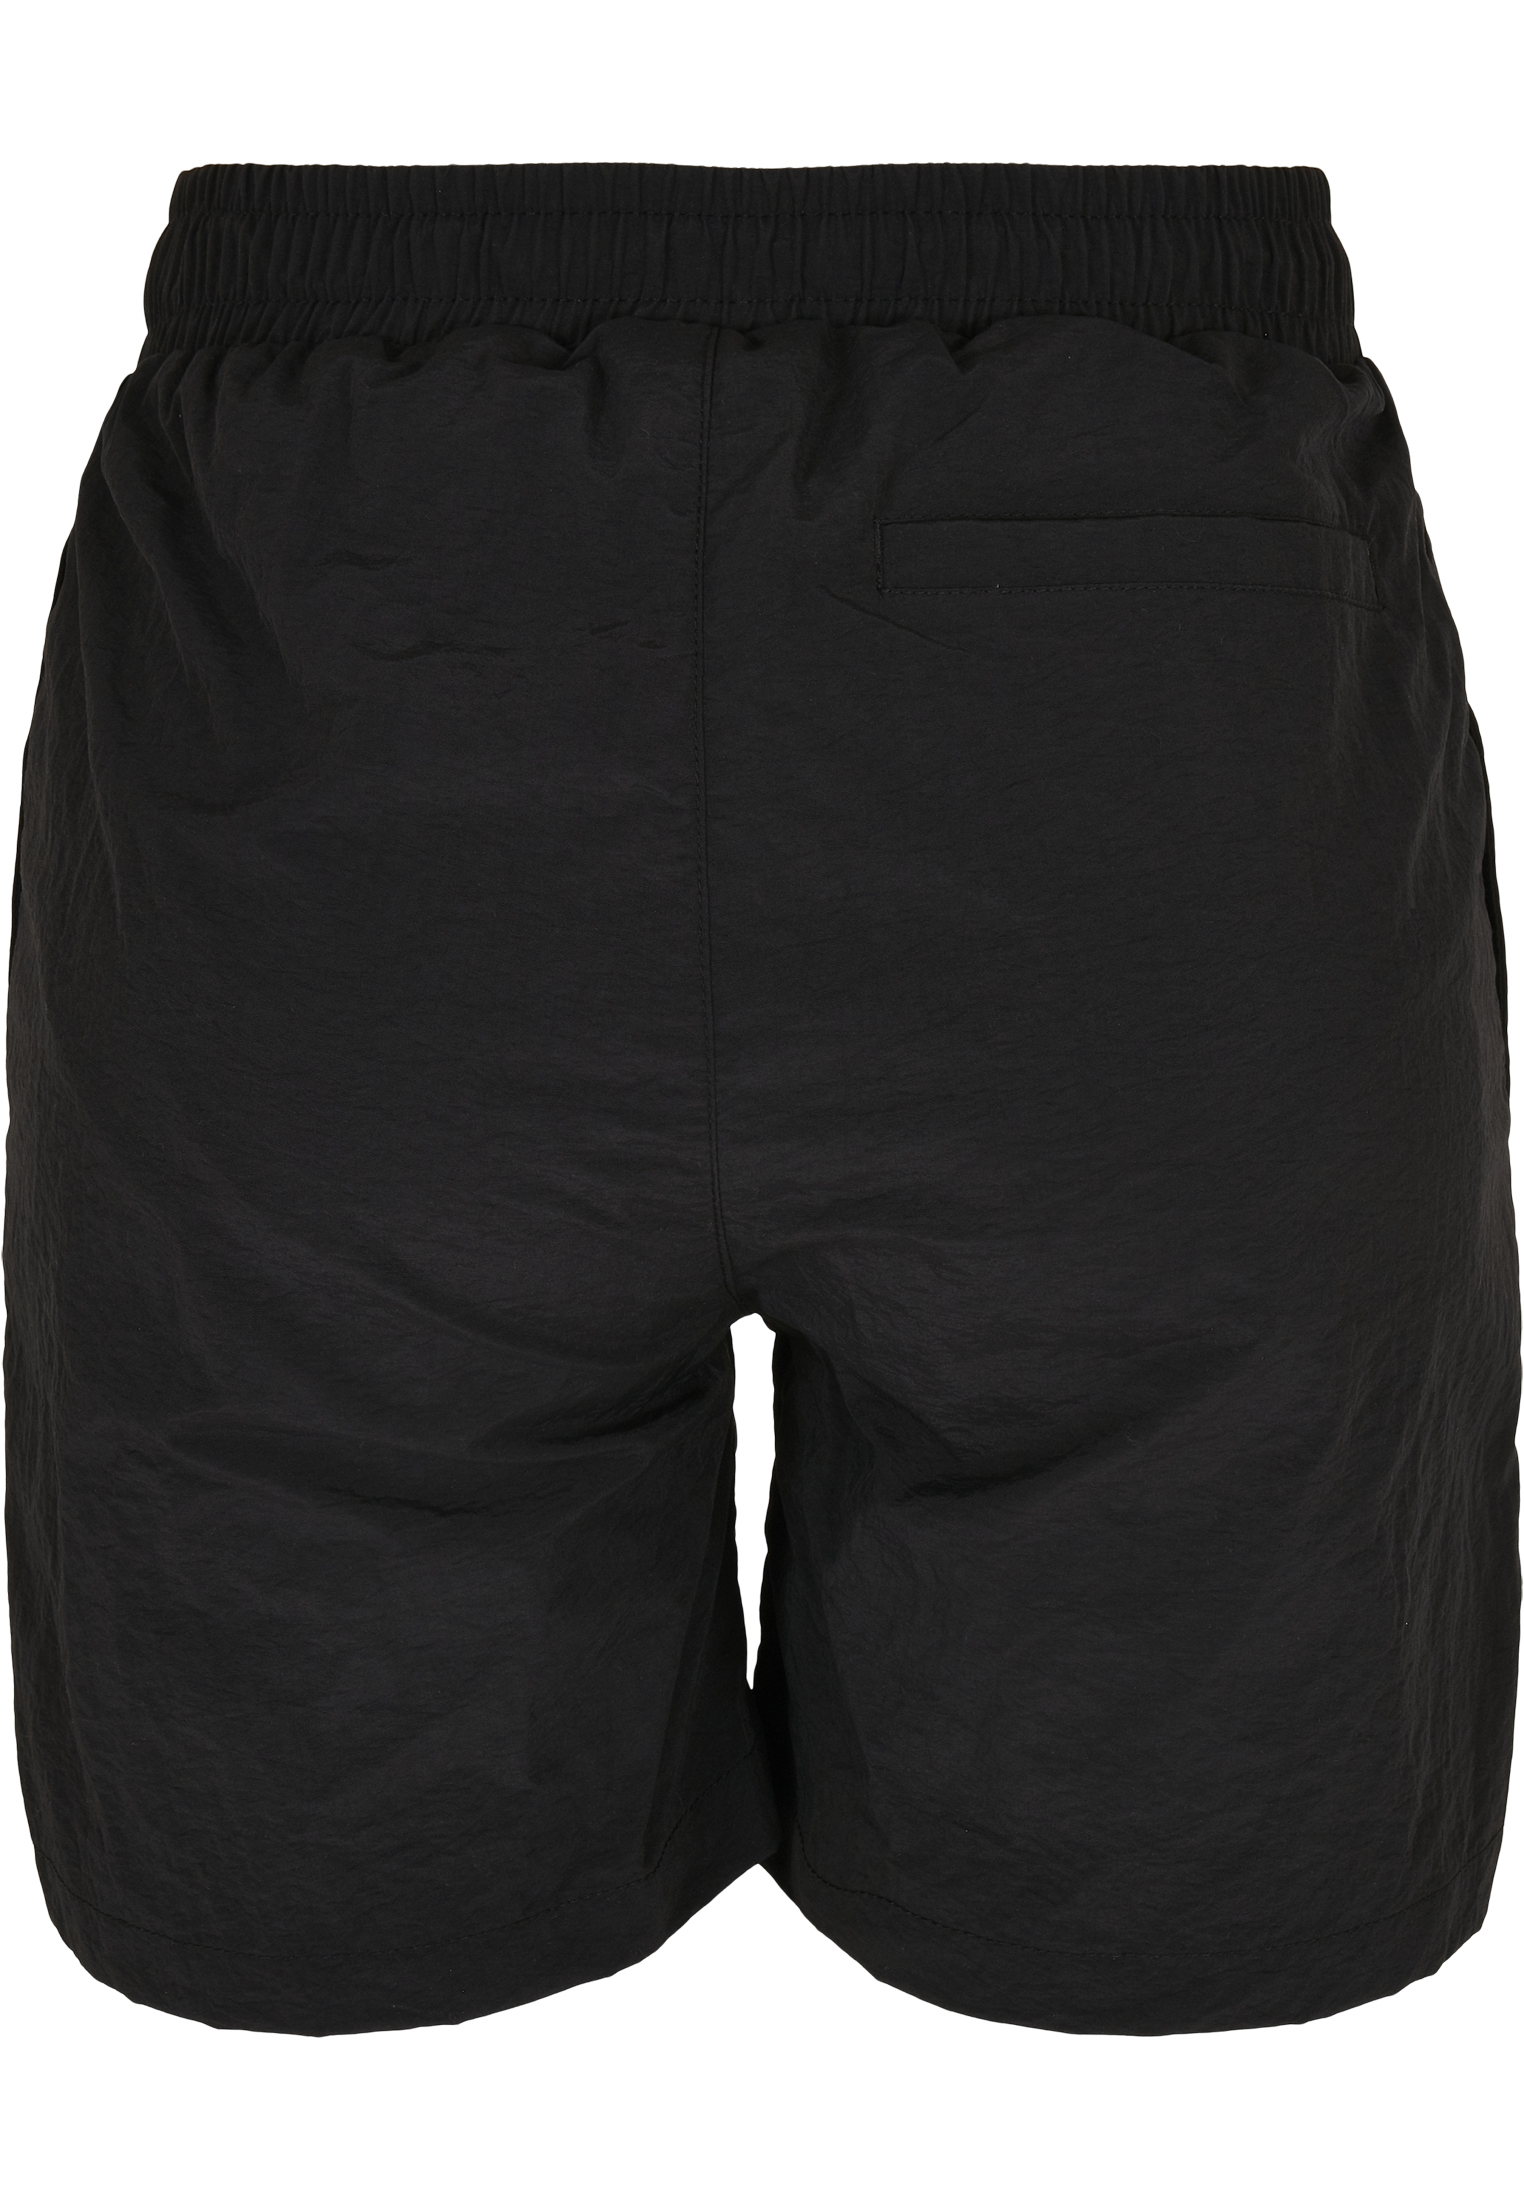 Ladies Crinkle Nylon Shorts-TB4348